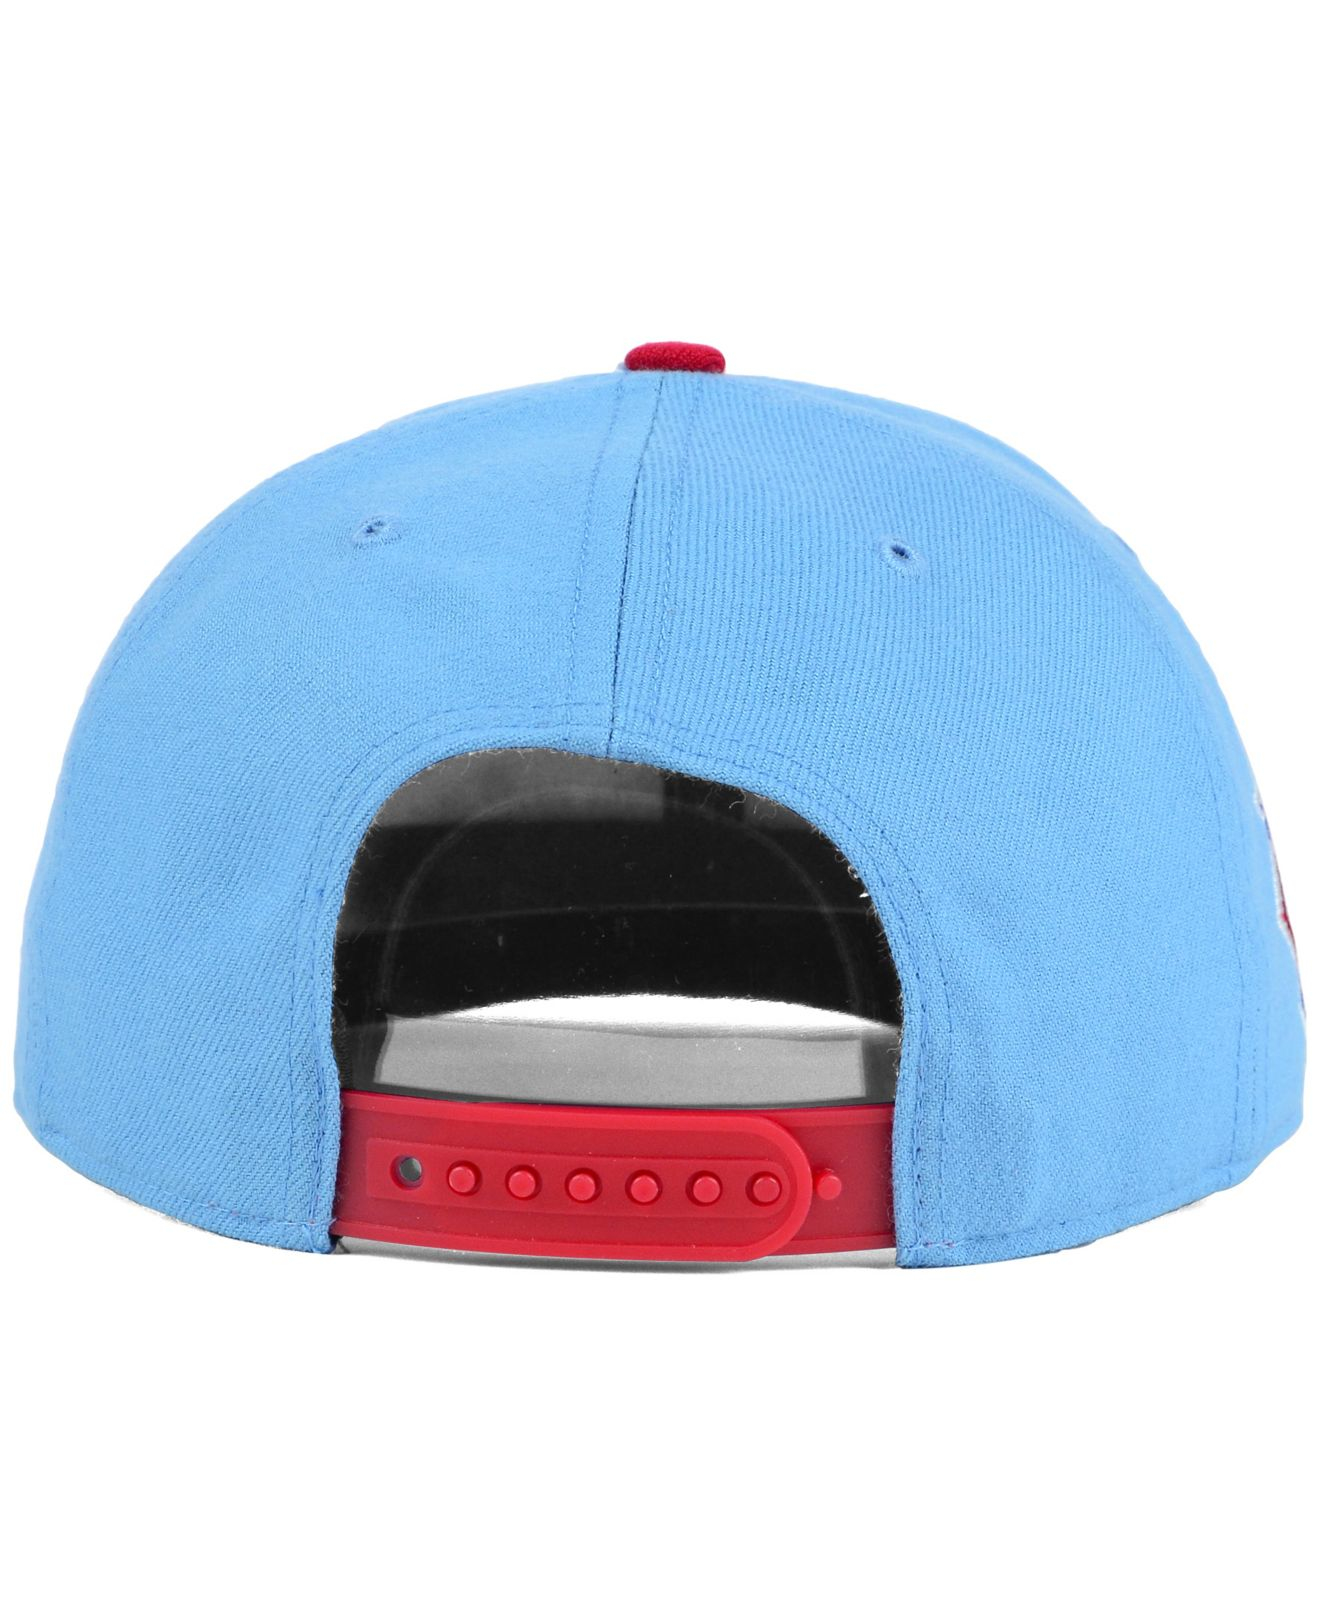 St Louis Cardinals Kids '47 Ball Cap Hat Snapback Baseball